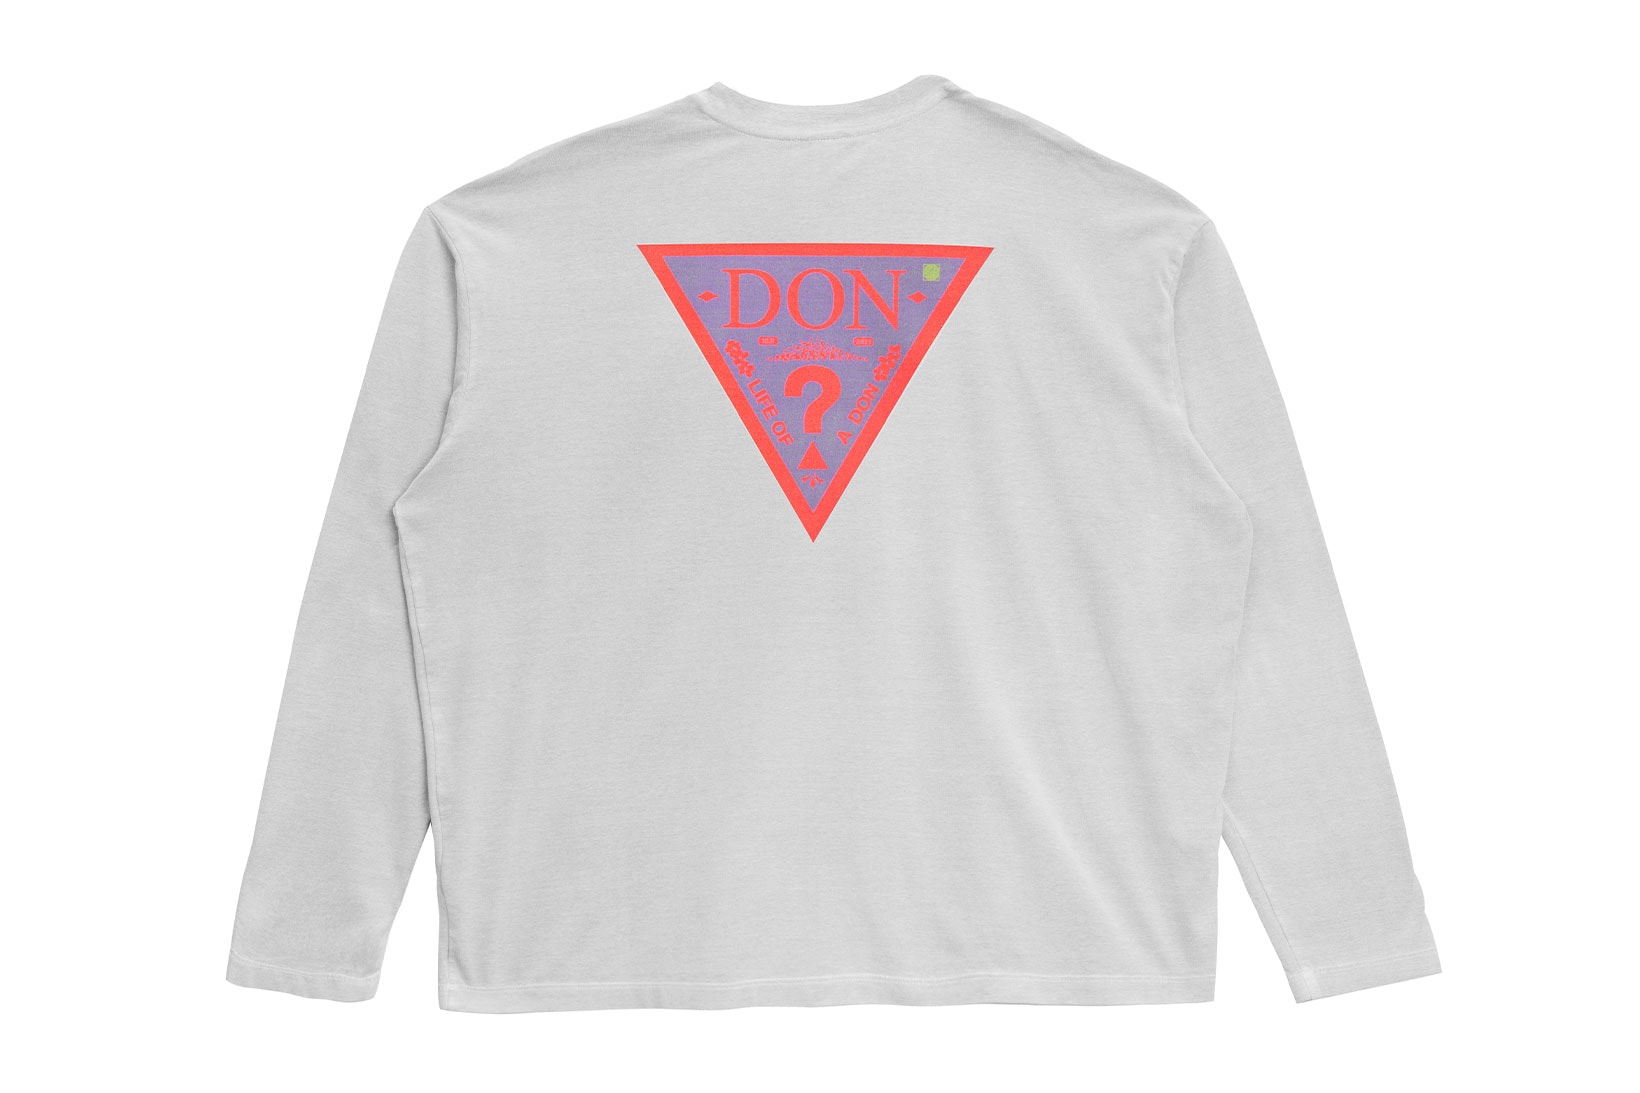 GUESS Originals Don Toliver Life of a Album Merch T-shirt Triangle Logo